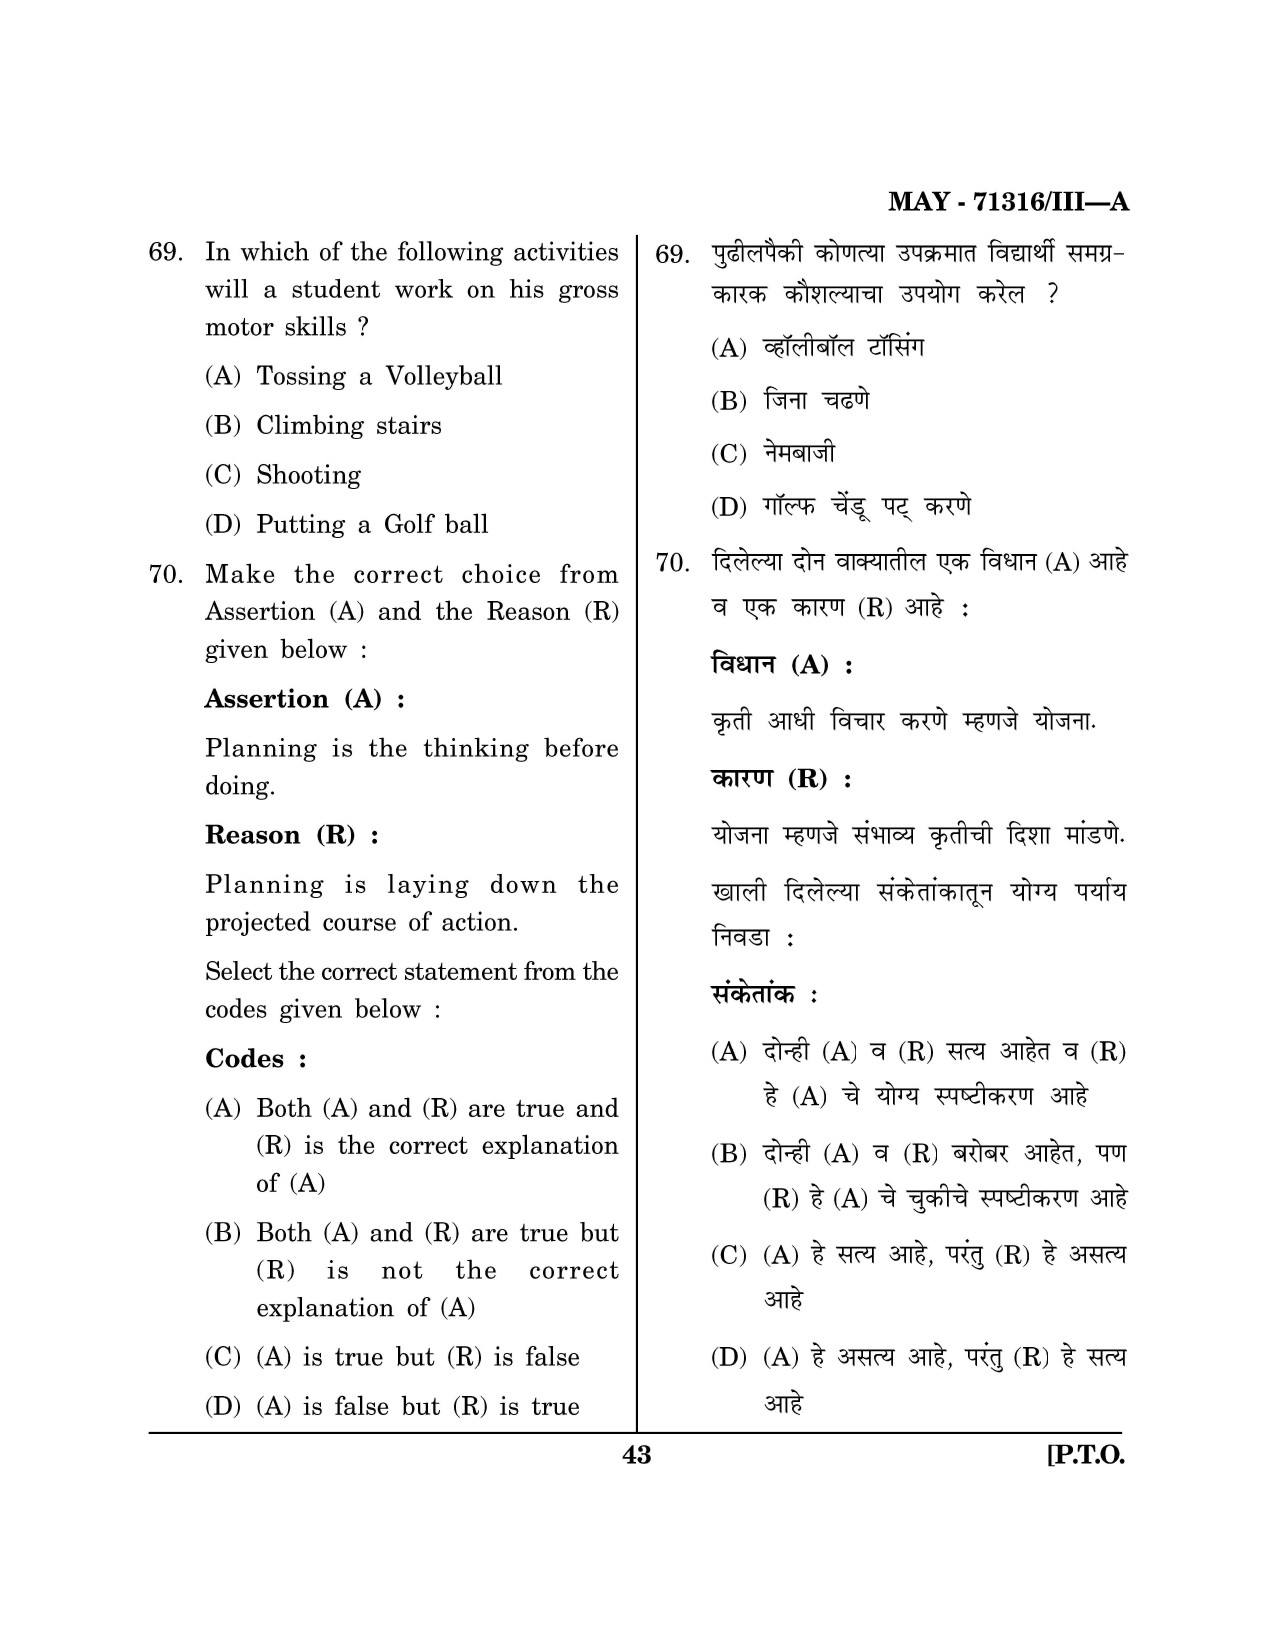 Maharashtra SET Physical Education Question Paper III May 2016 42